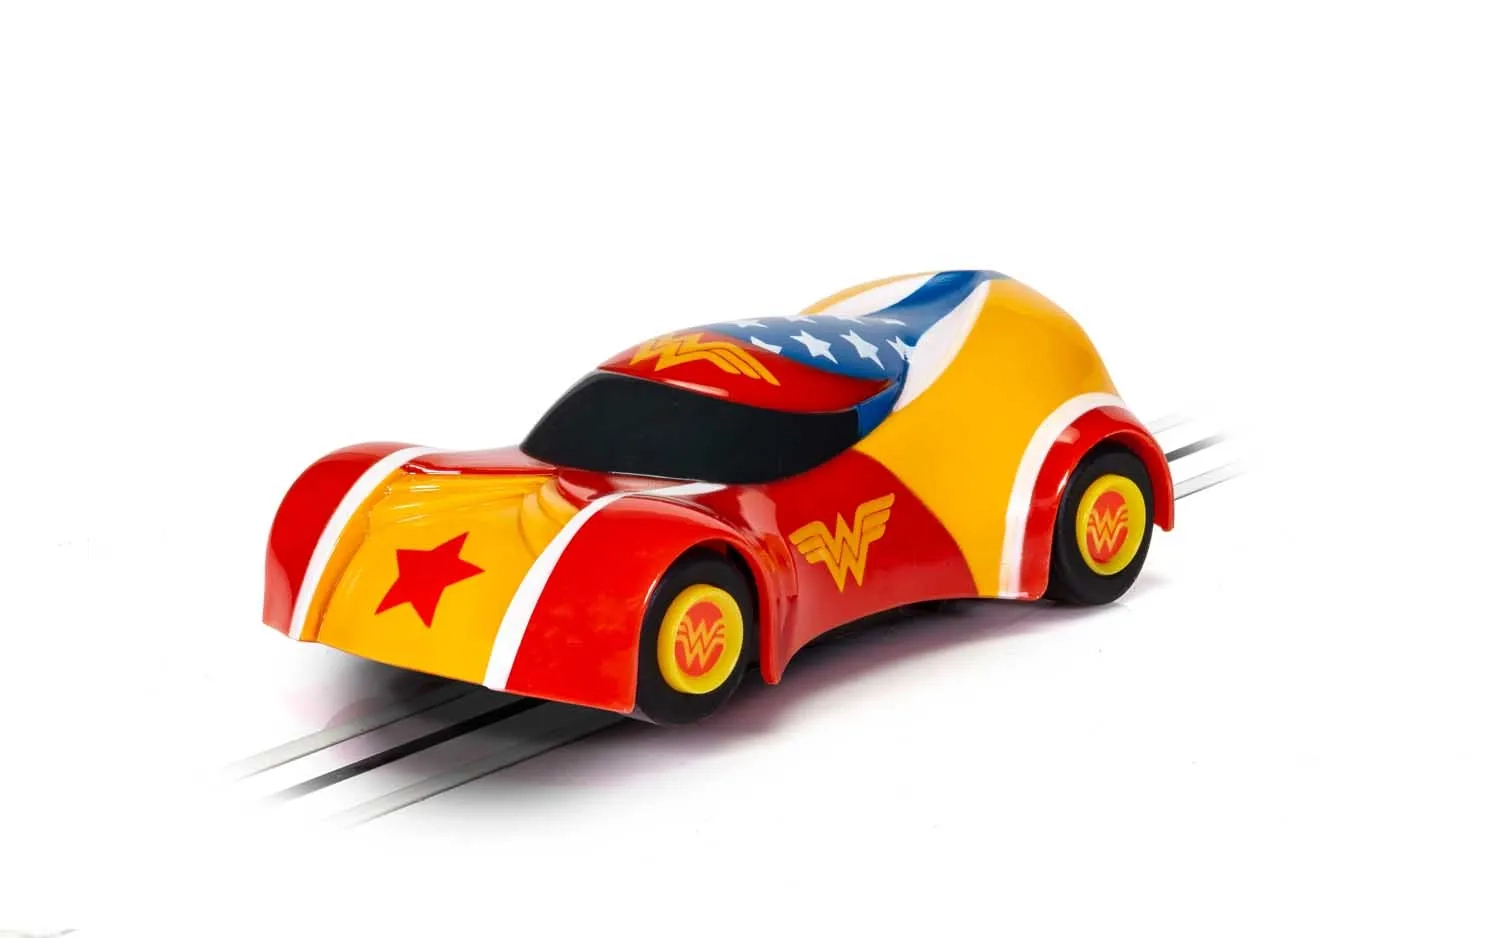 Justice League Wonder Woman car (new system)